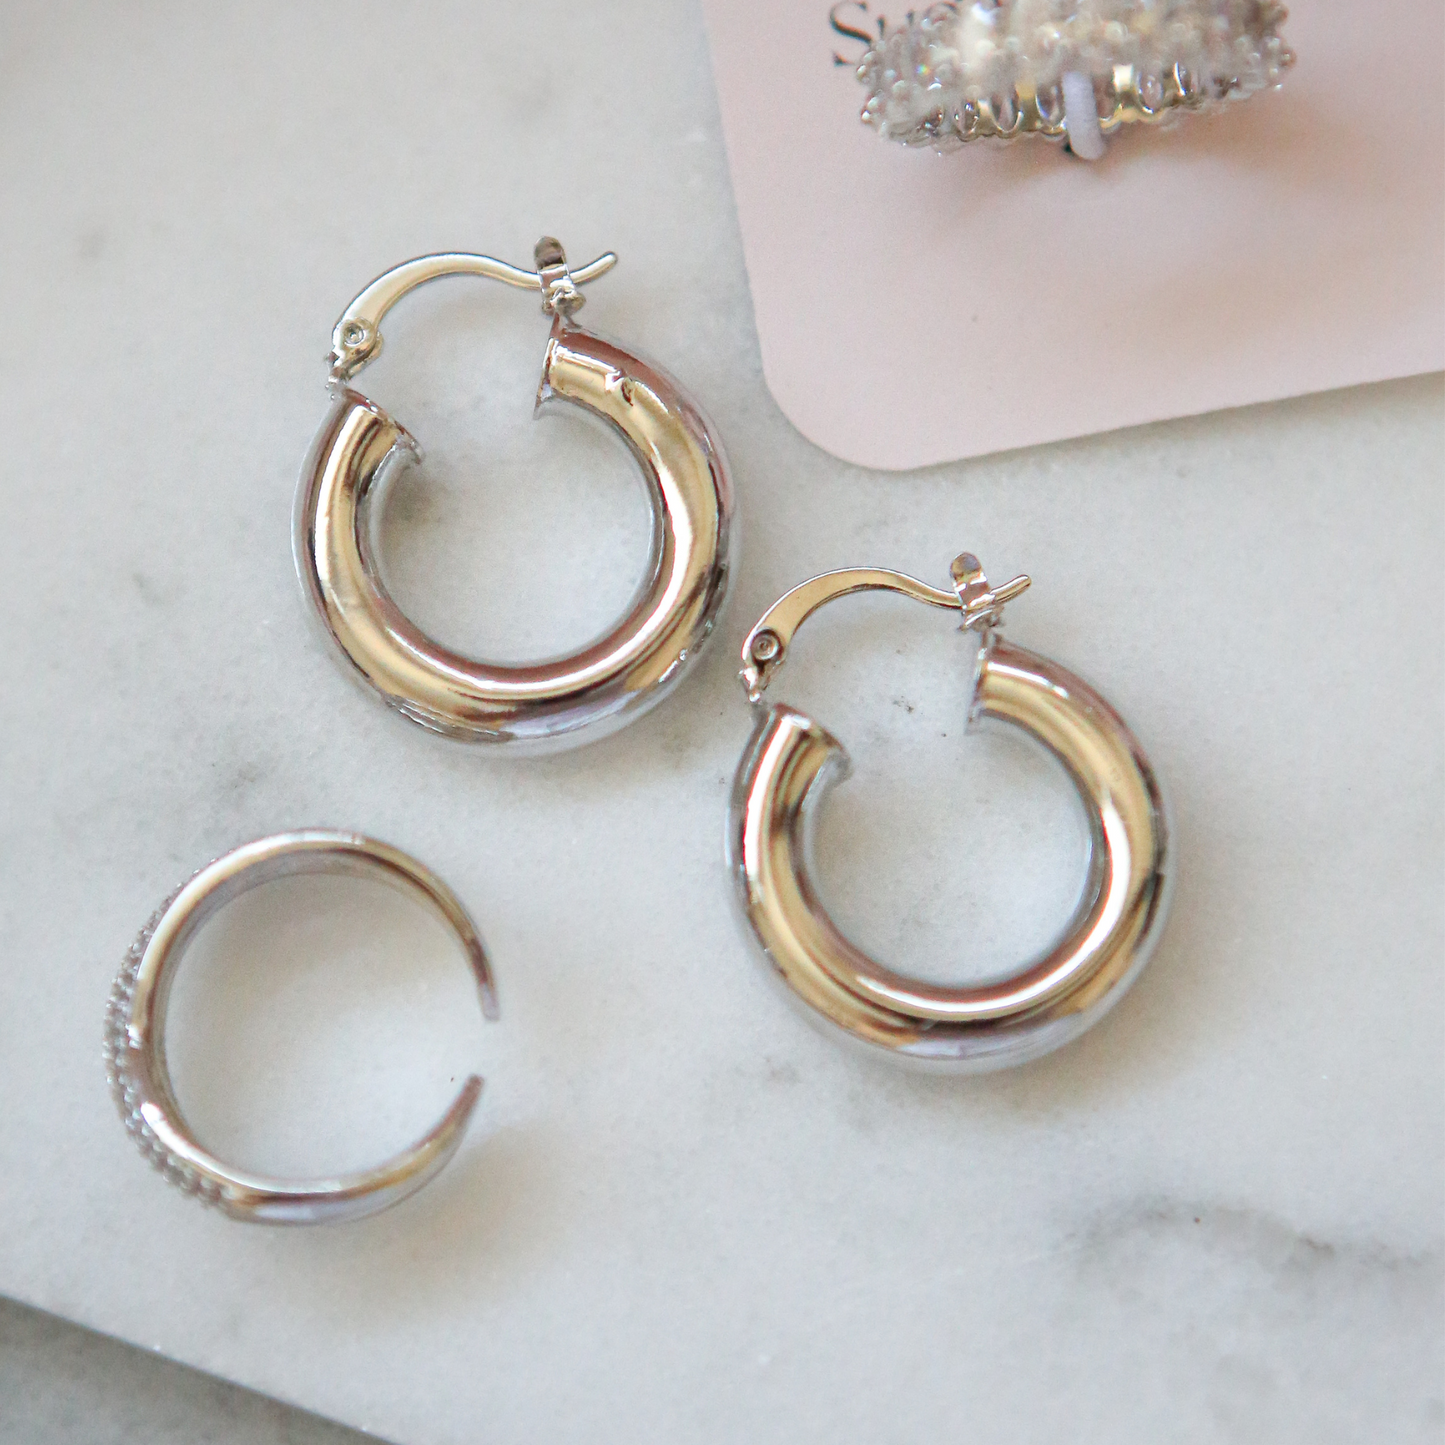 Silver Minimalist Hoop Earrings